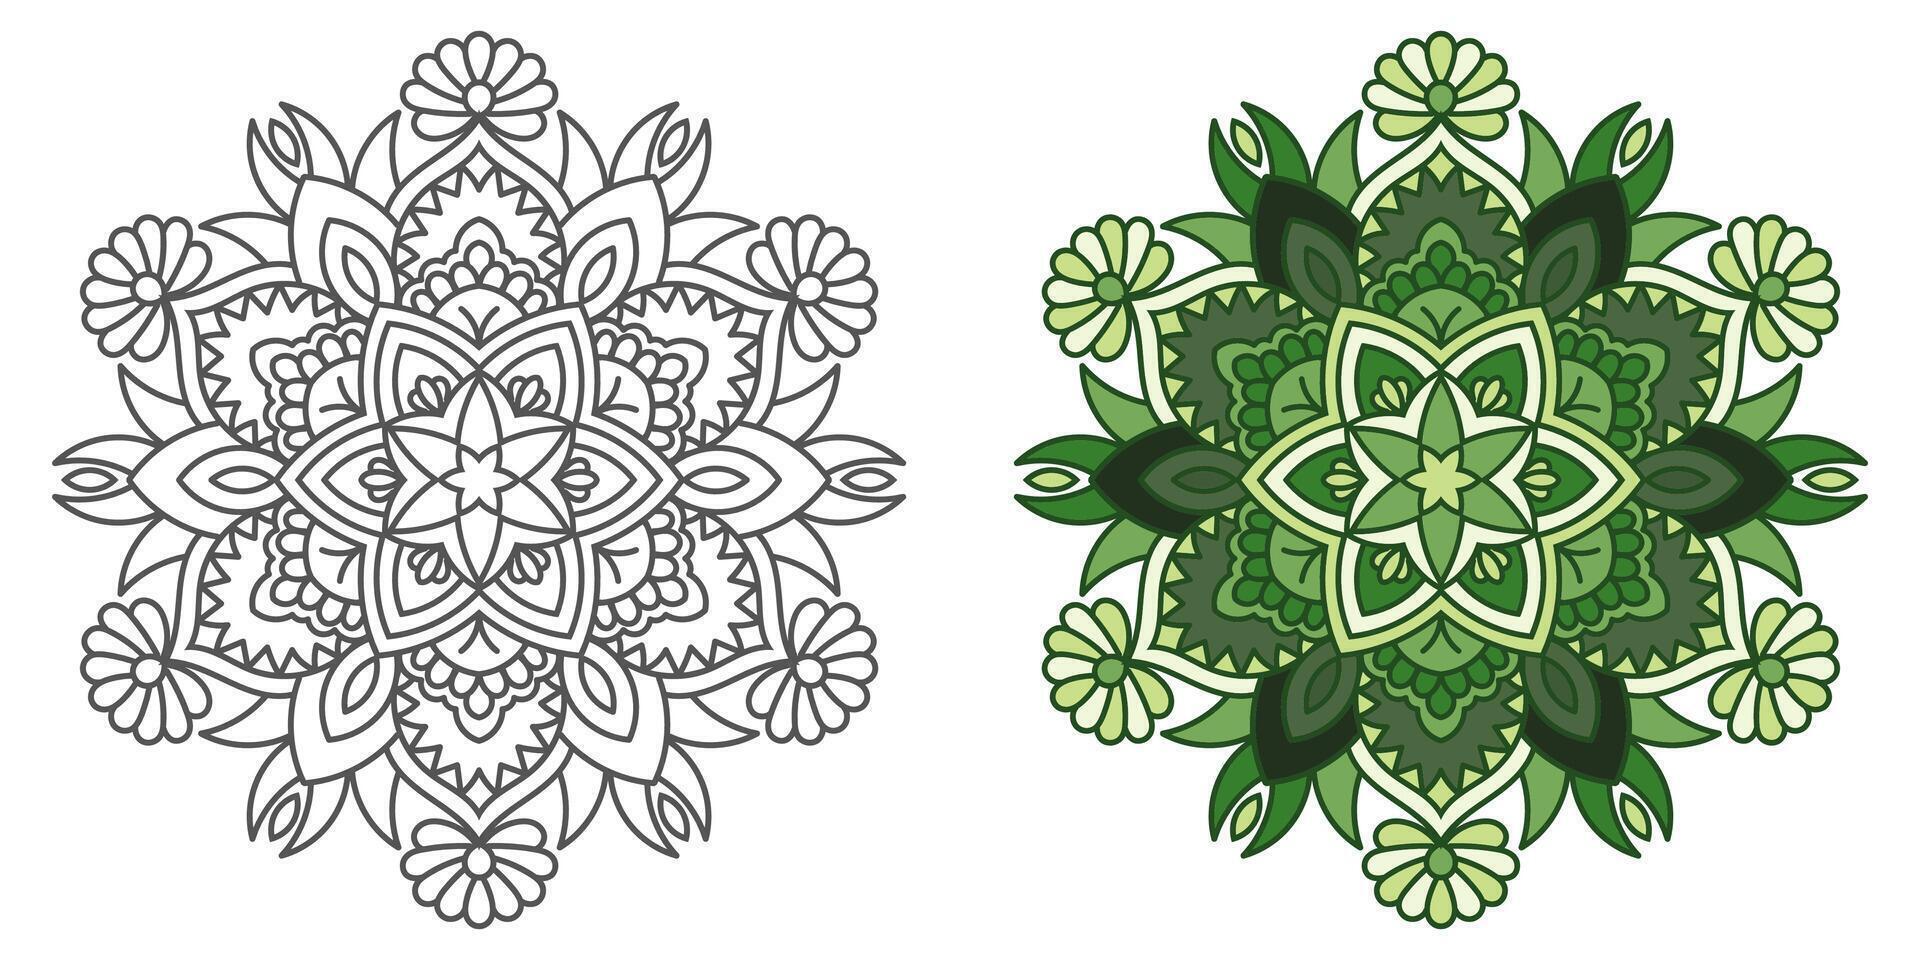 abstrakt Mandala Blumen- Ornament, bunt modern Mandala Design ,Mandala Linie Illustration vektor